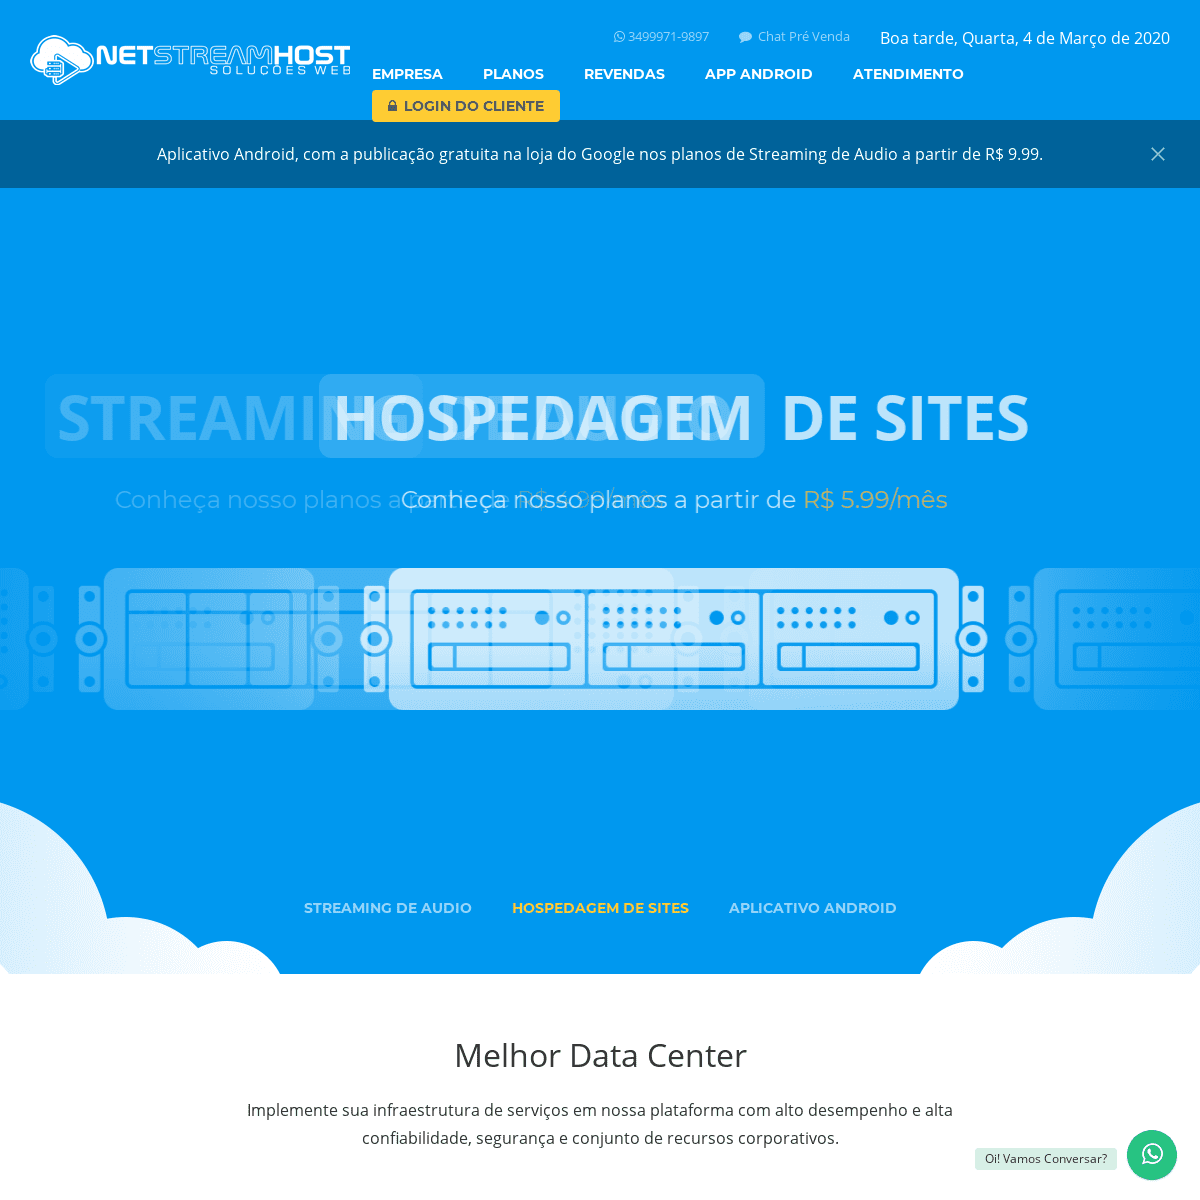 A complete backup of netstreamhost.com